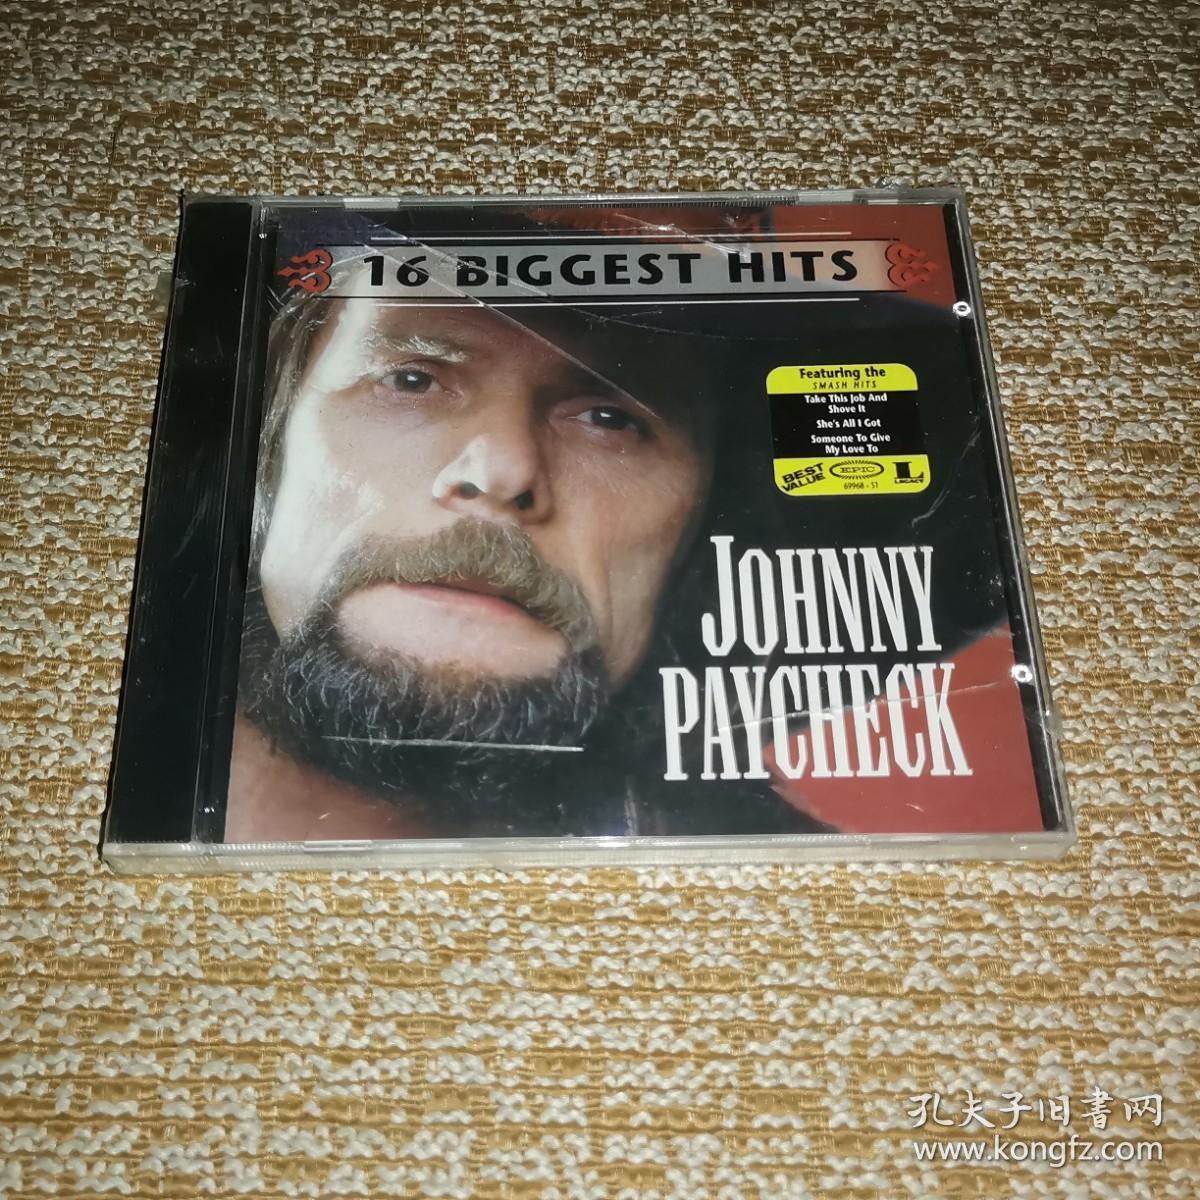 【美】乡村大师 Johnny Paycheck - 16 Biggest Hits 原版未拆封